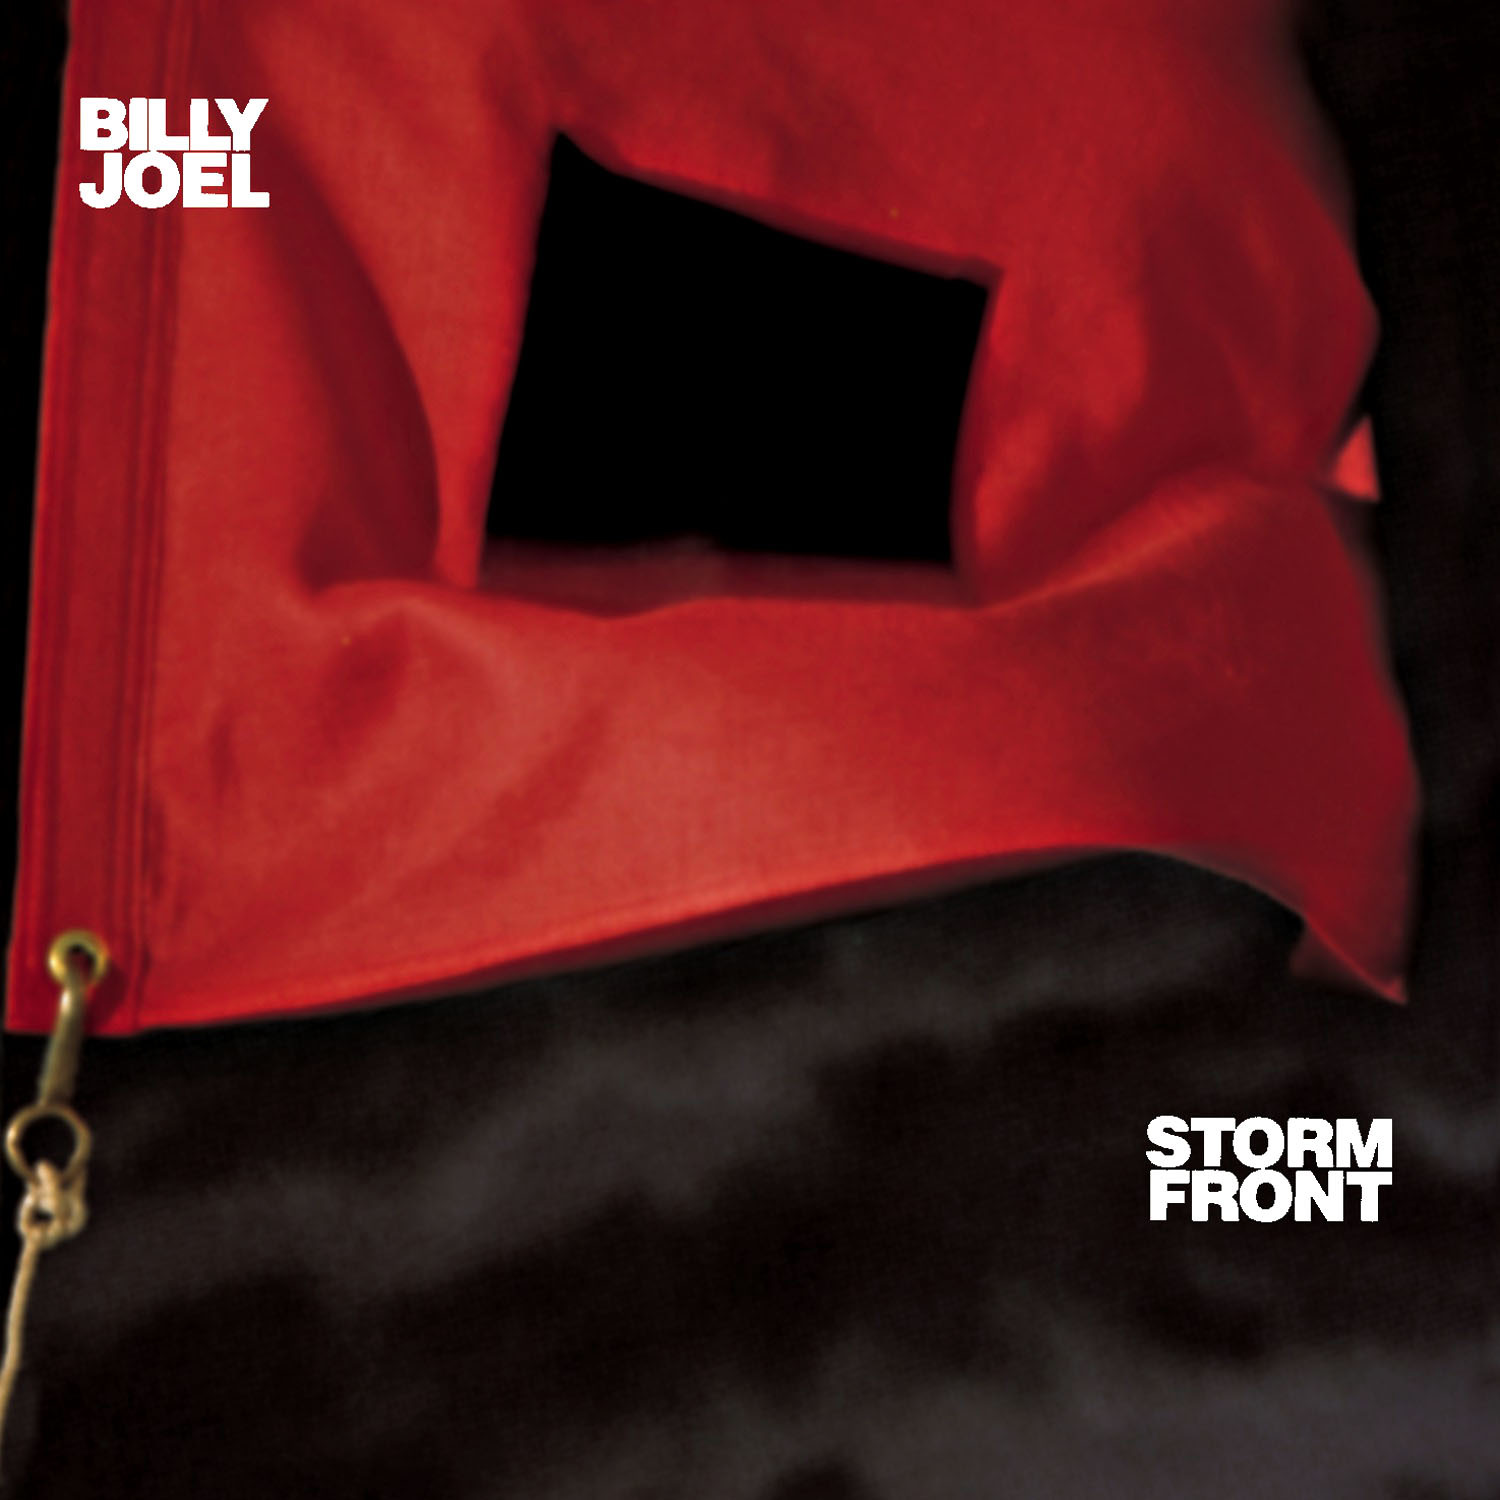 Billy Joel (ビリー・ジョエル)『ストーム・フロント(Storm Front)』高画質ジャケット画像 (ジャケ写)